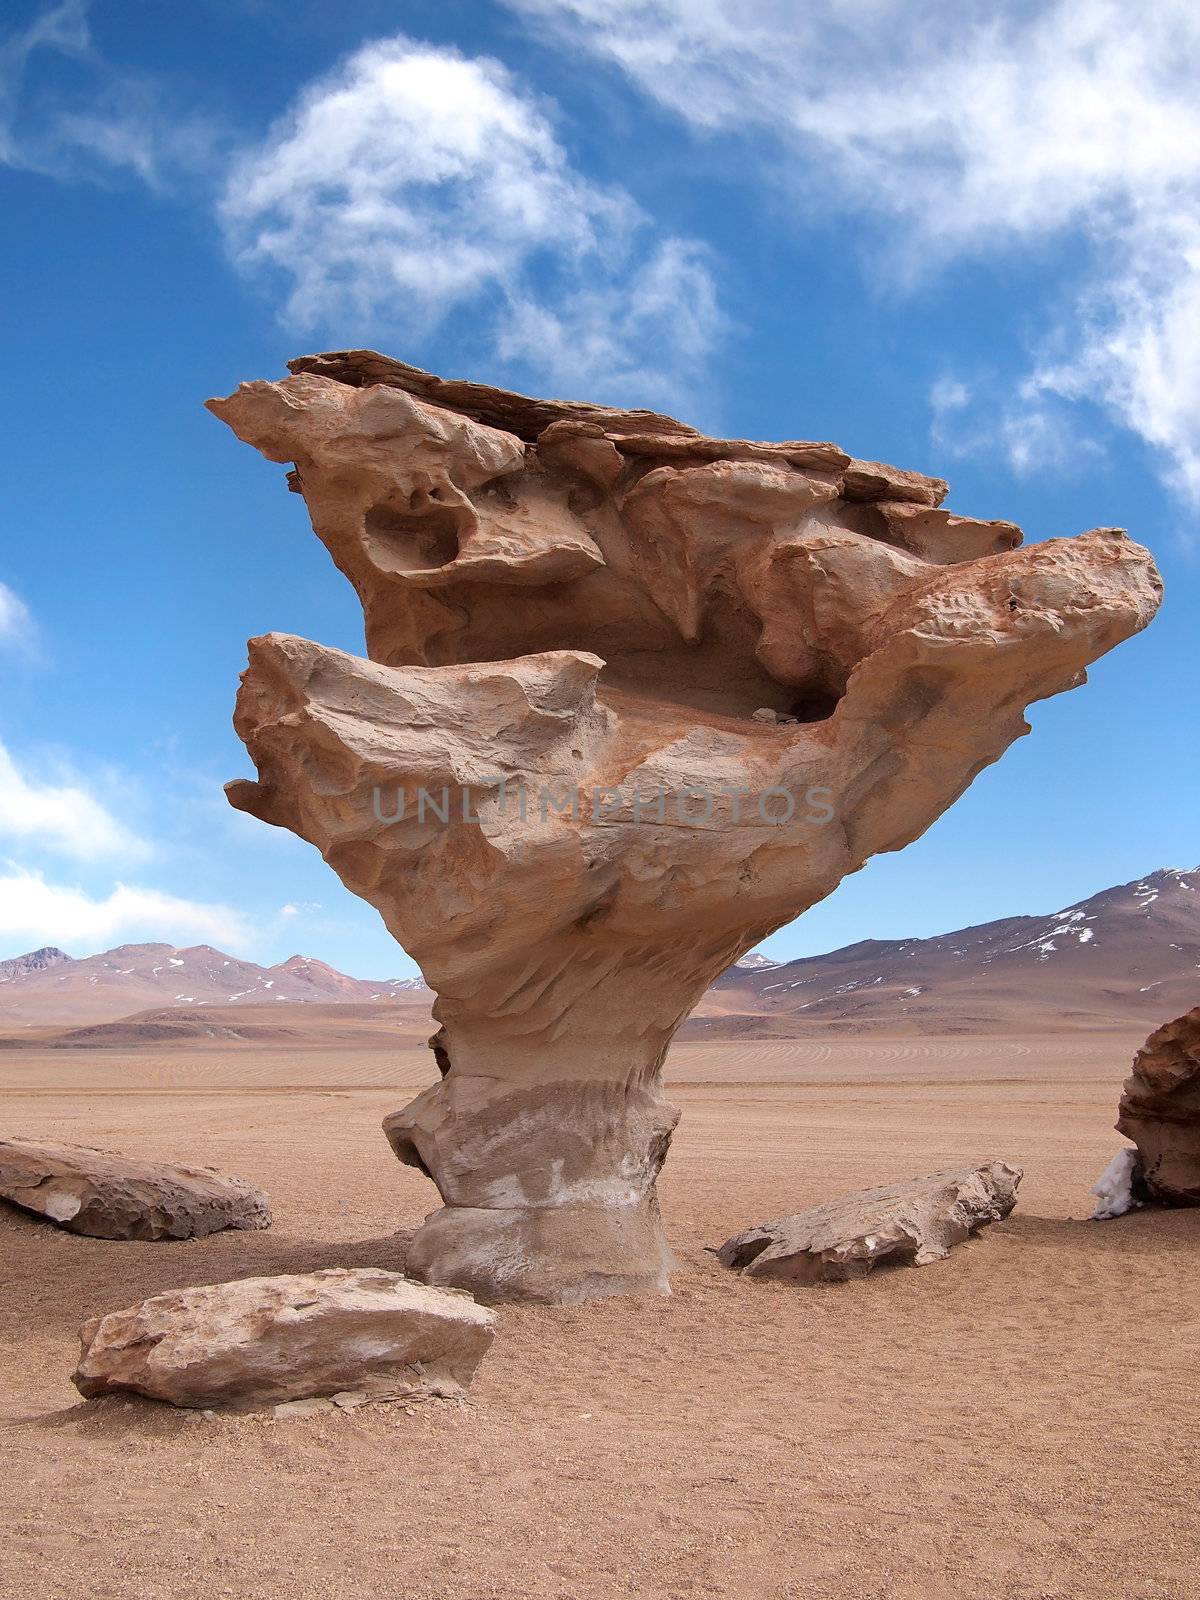 Stone tree, arbol de piedra, in the desert of Bolivia by pljvv